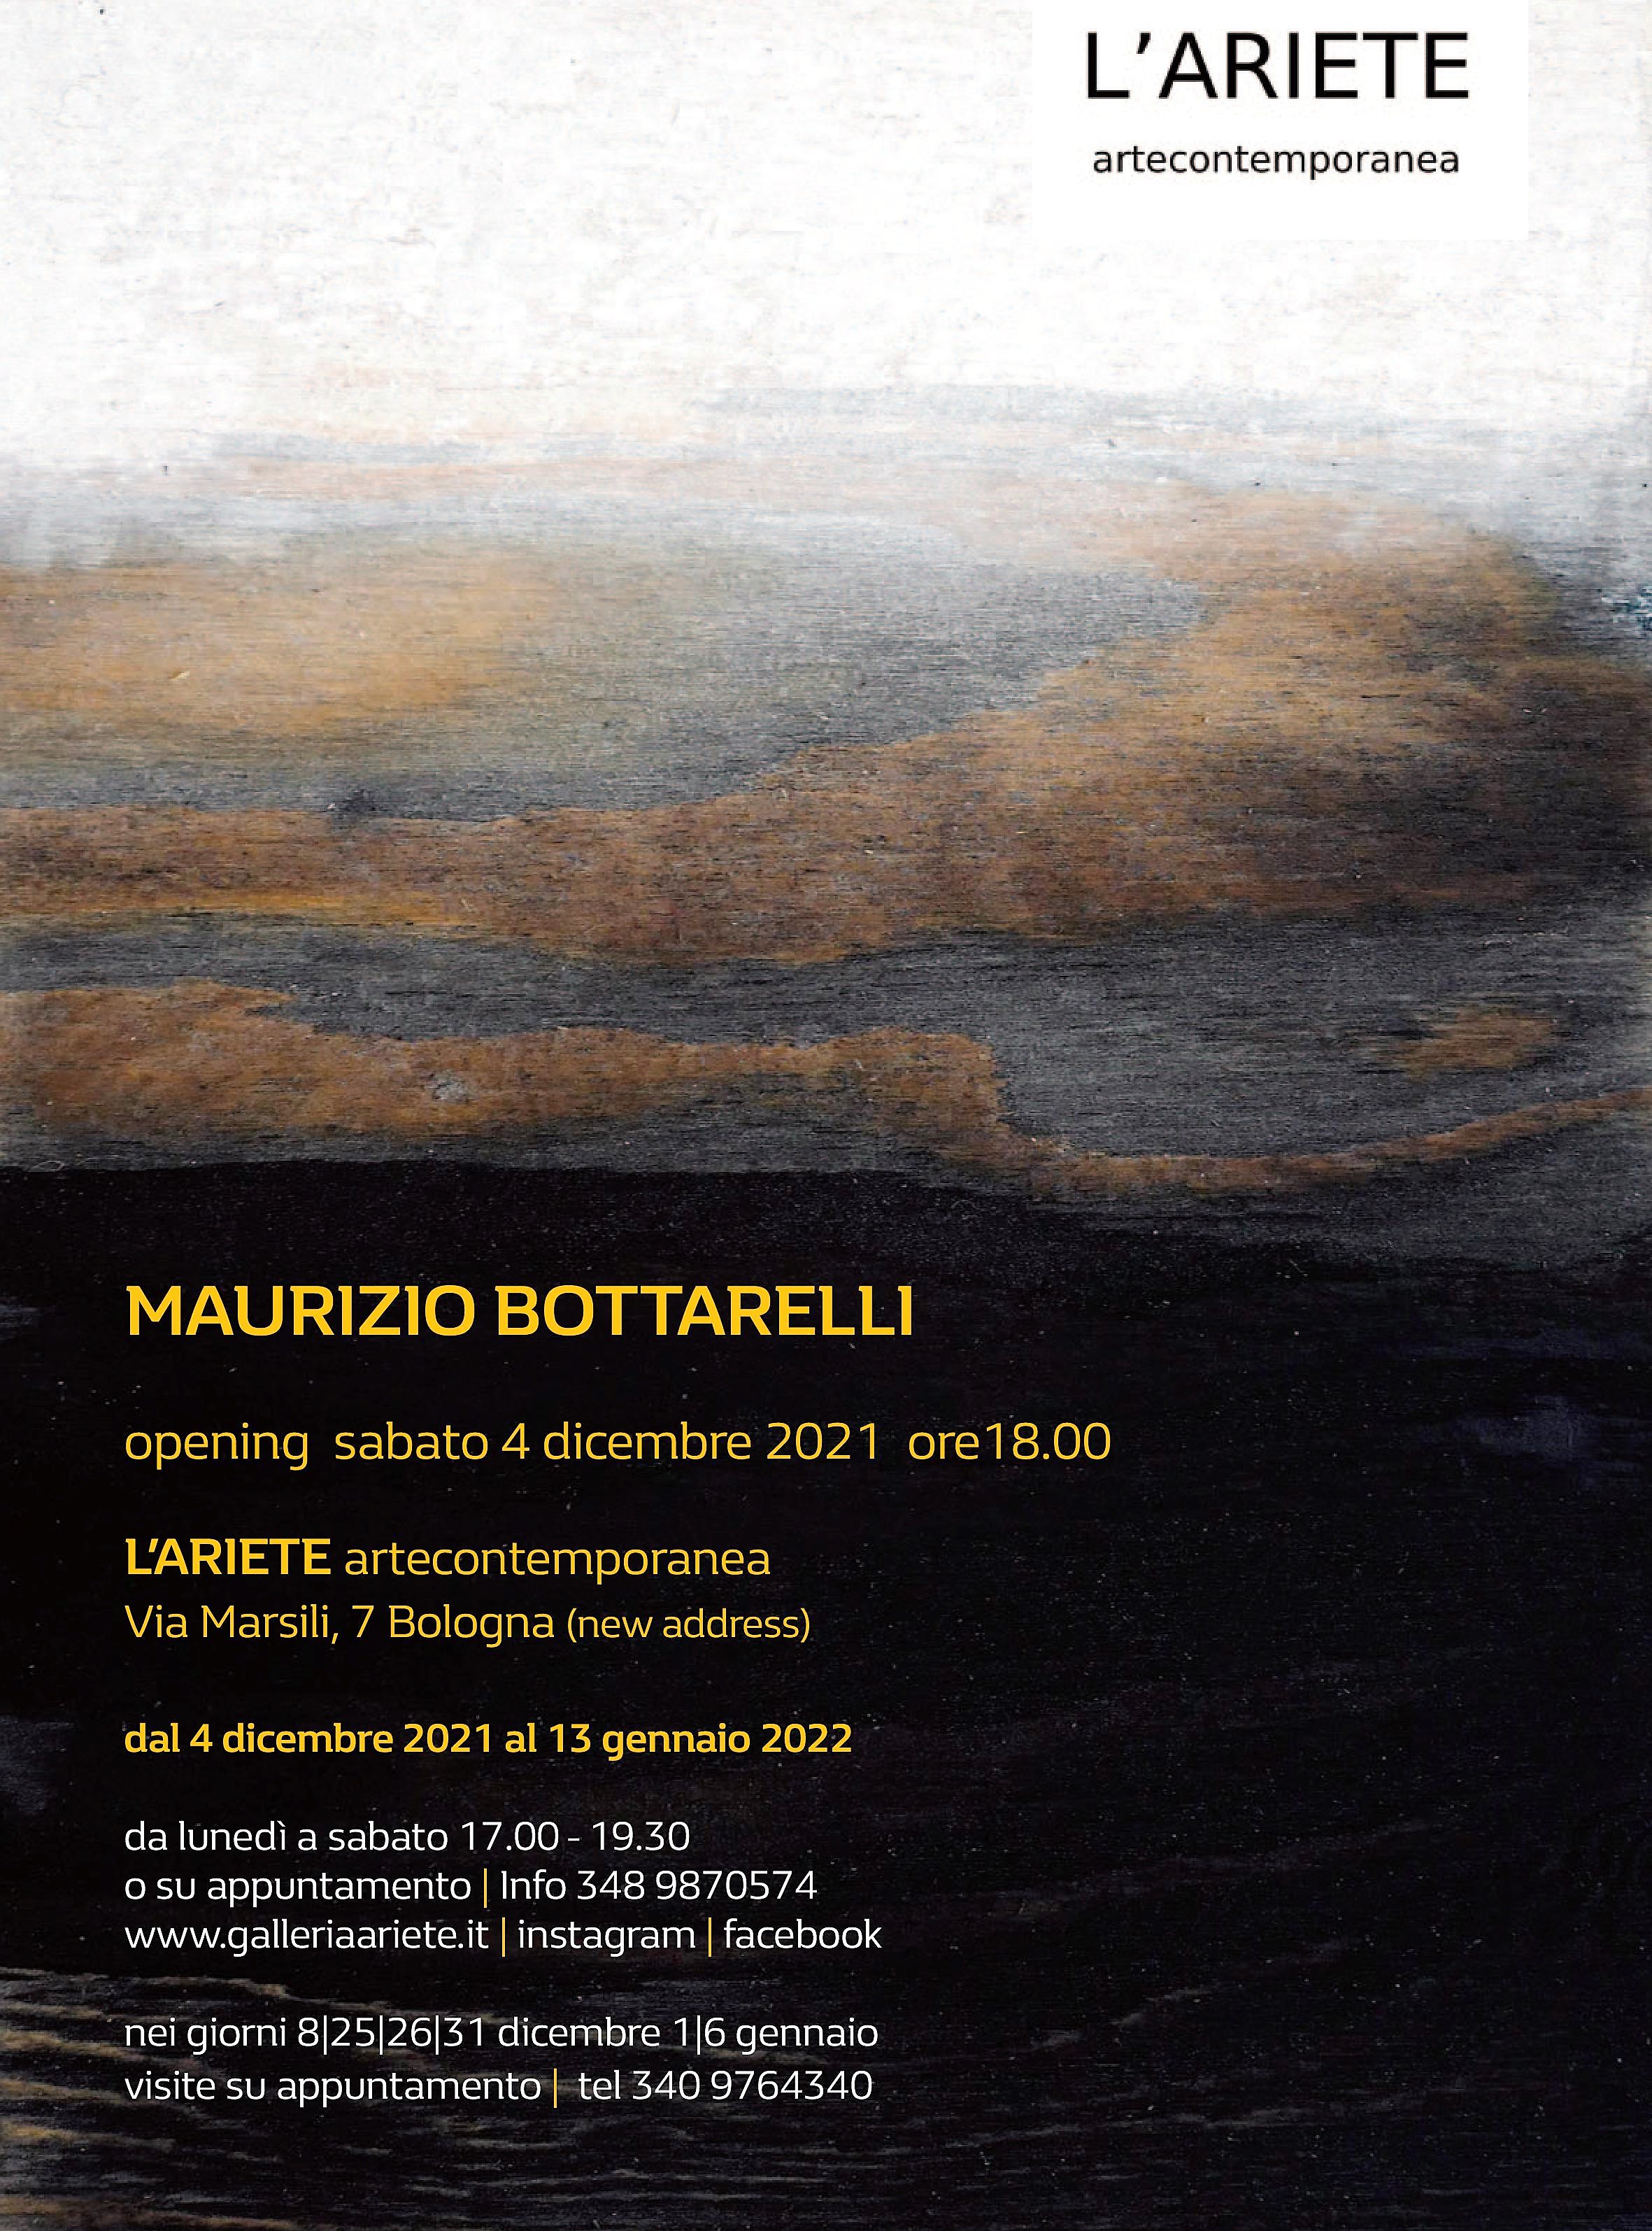 Maurizio Bottarelli new works